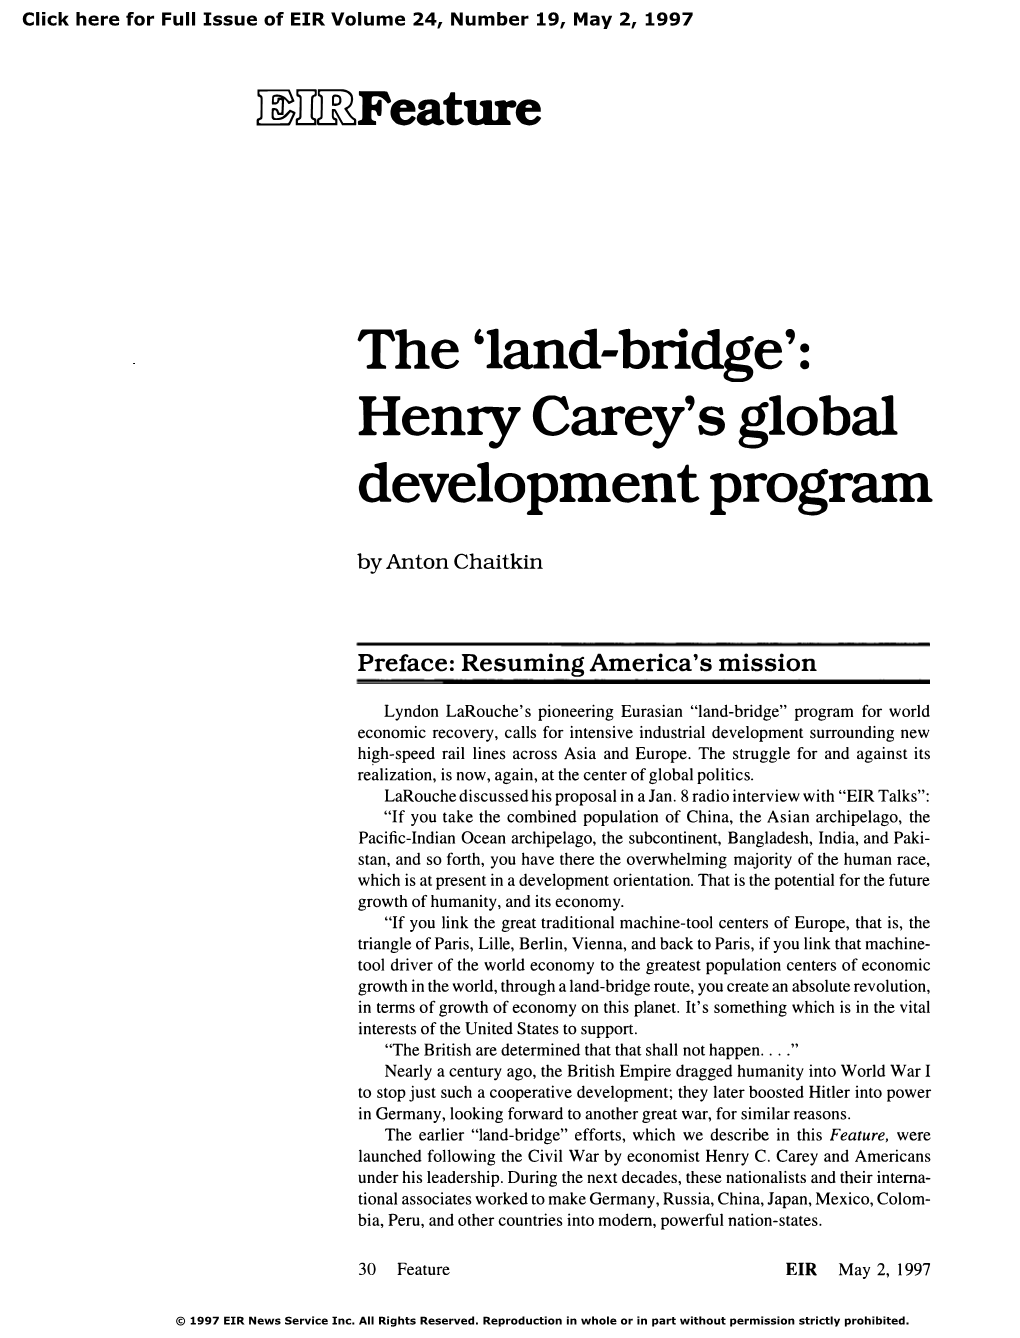 The 'Land-Bridge': Henry Carey's Global Development Program